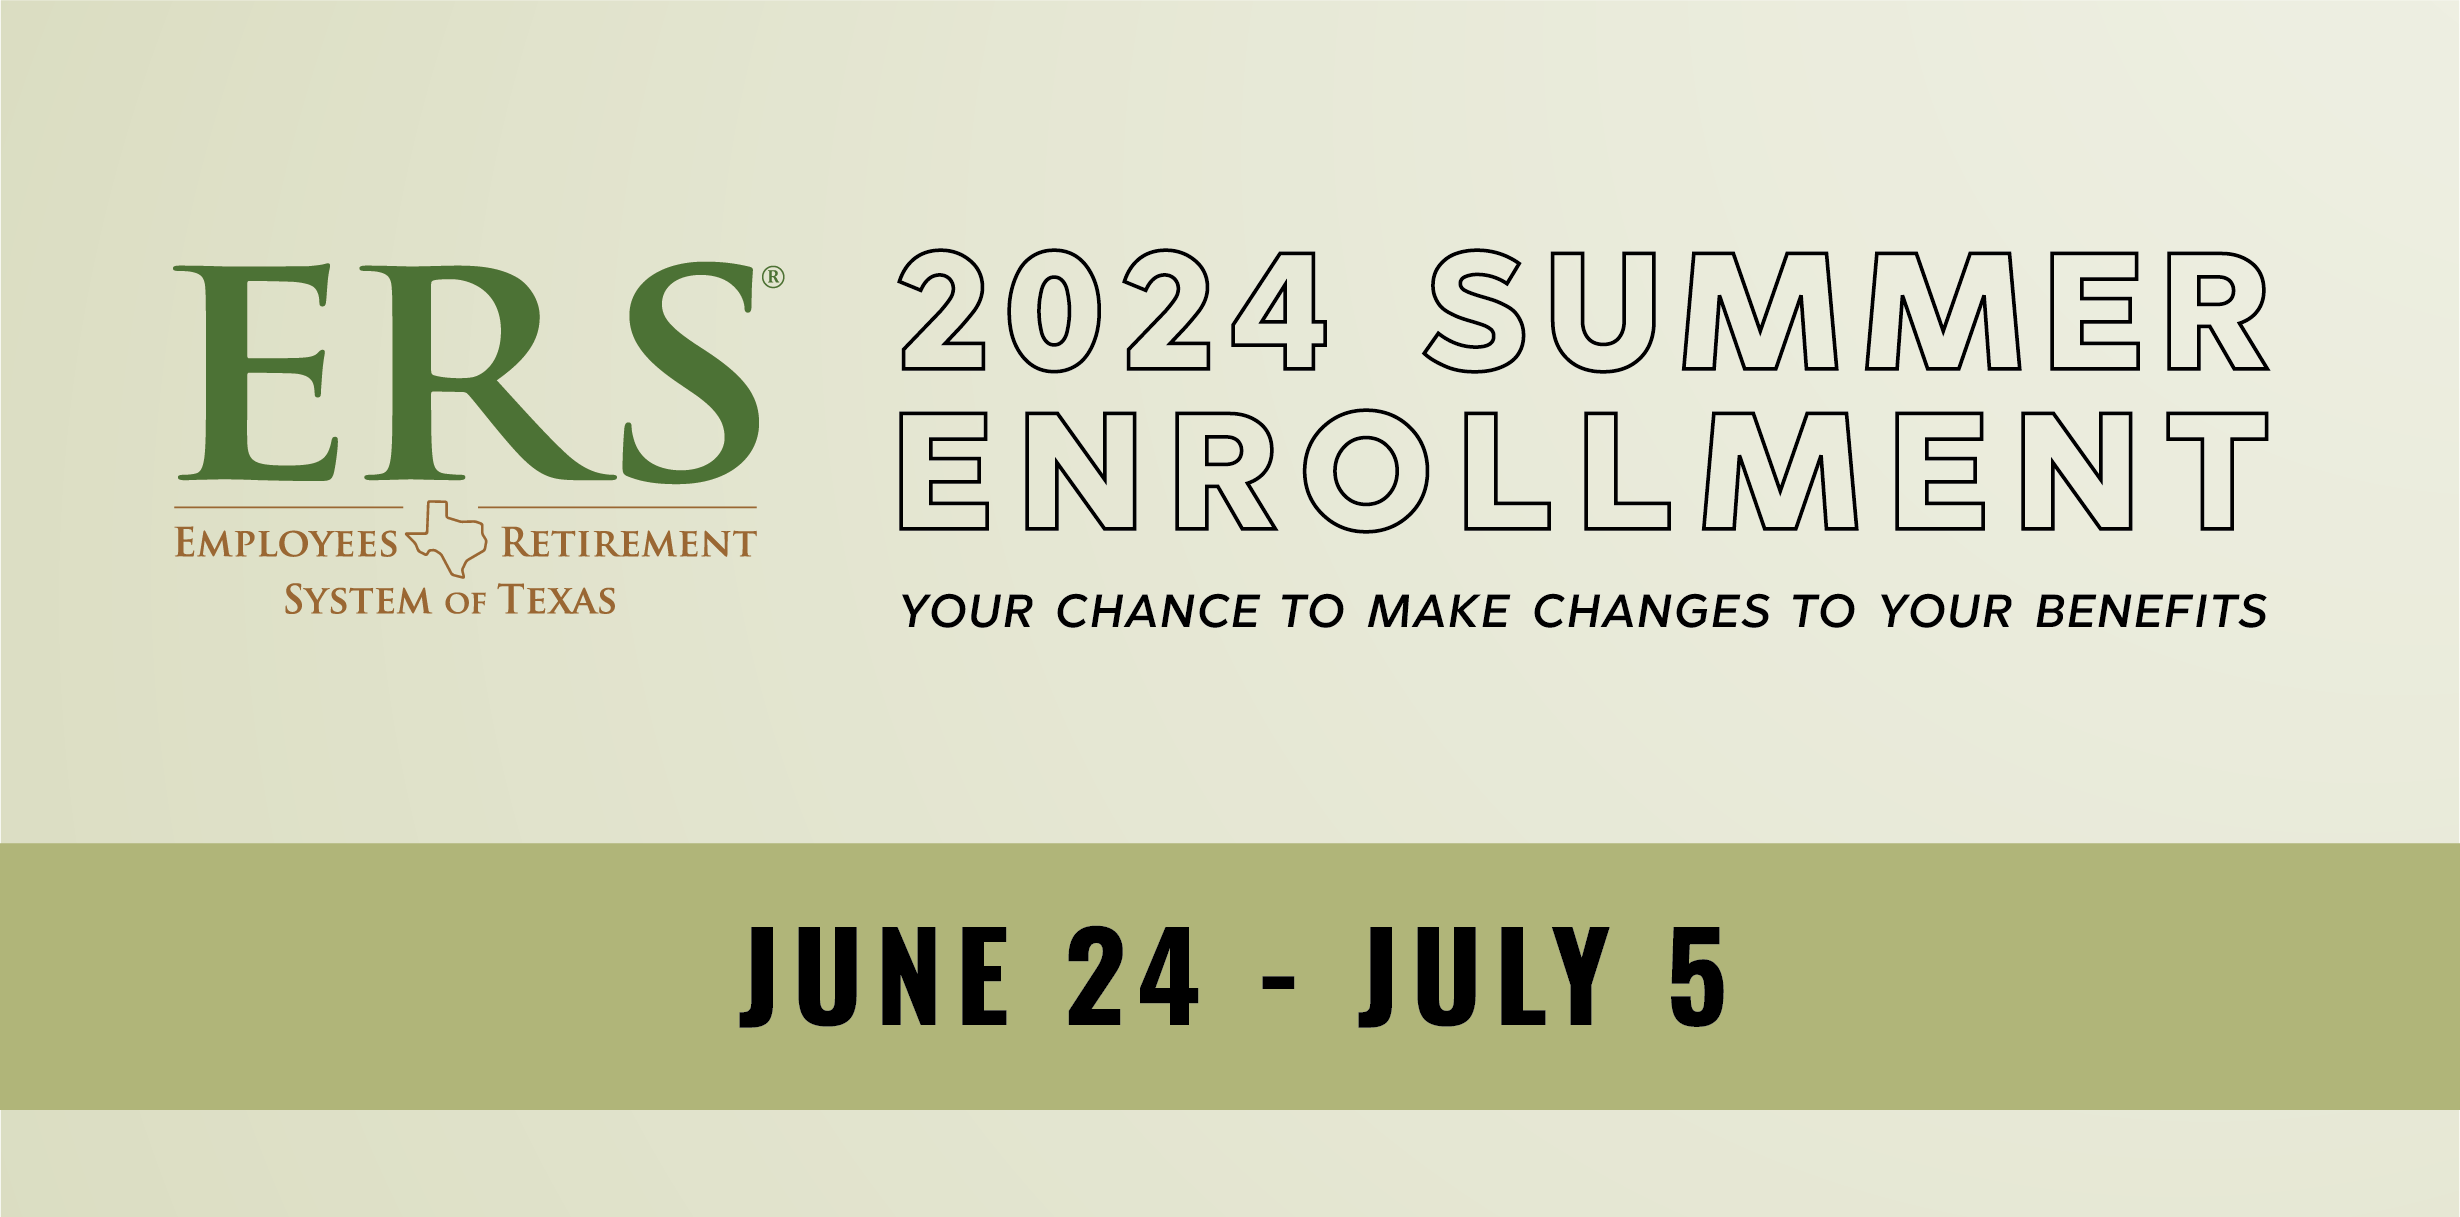 ERS Summer Enrollment for 2024 is June 24 through July 5.